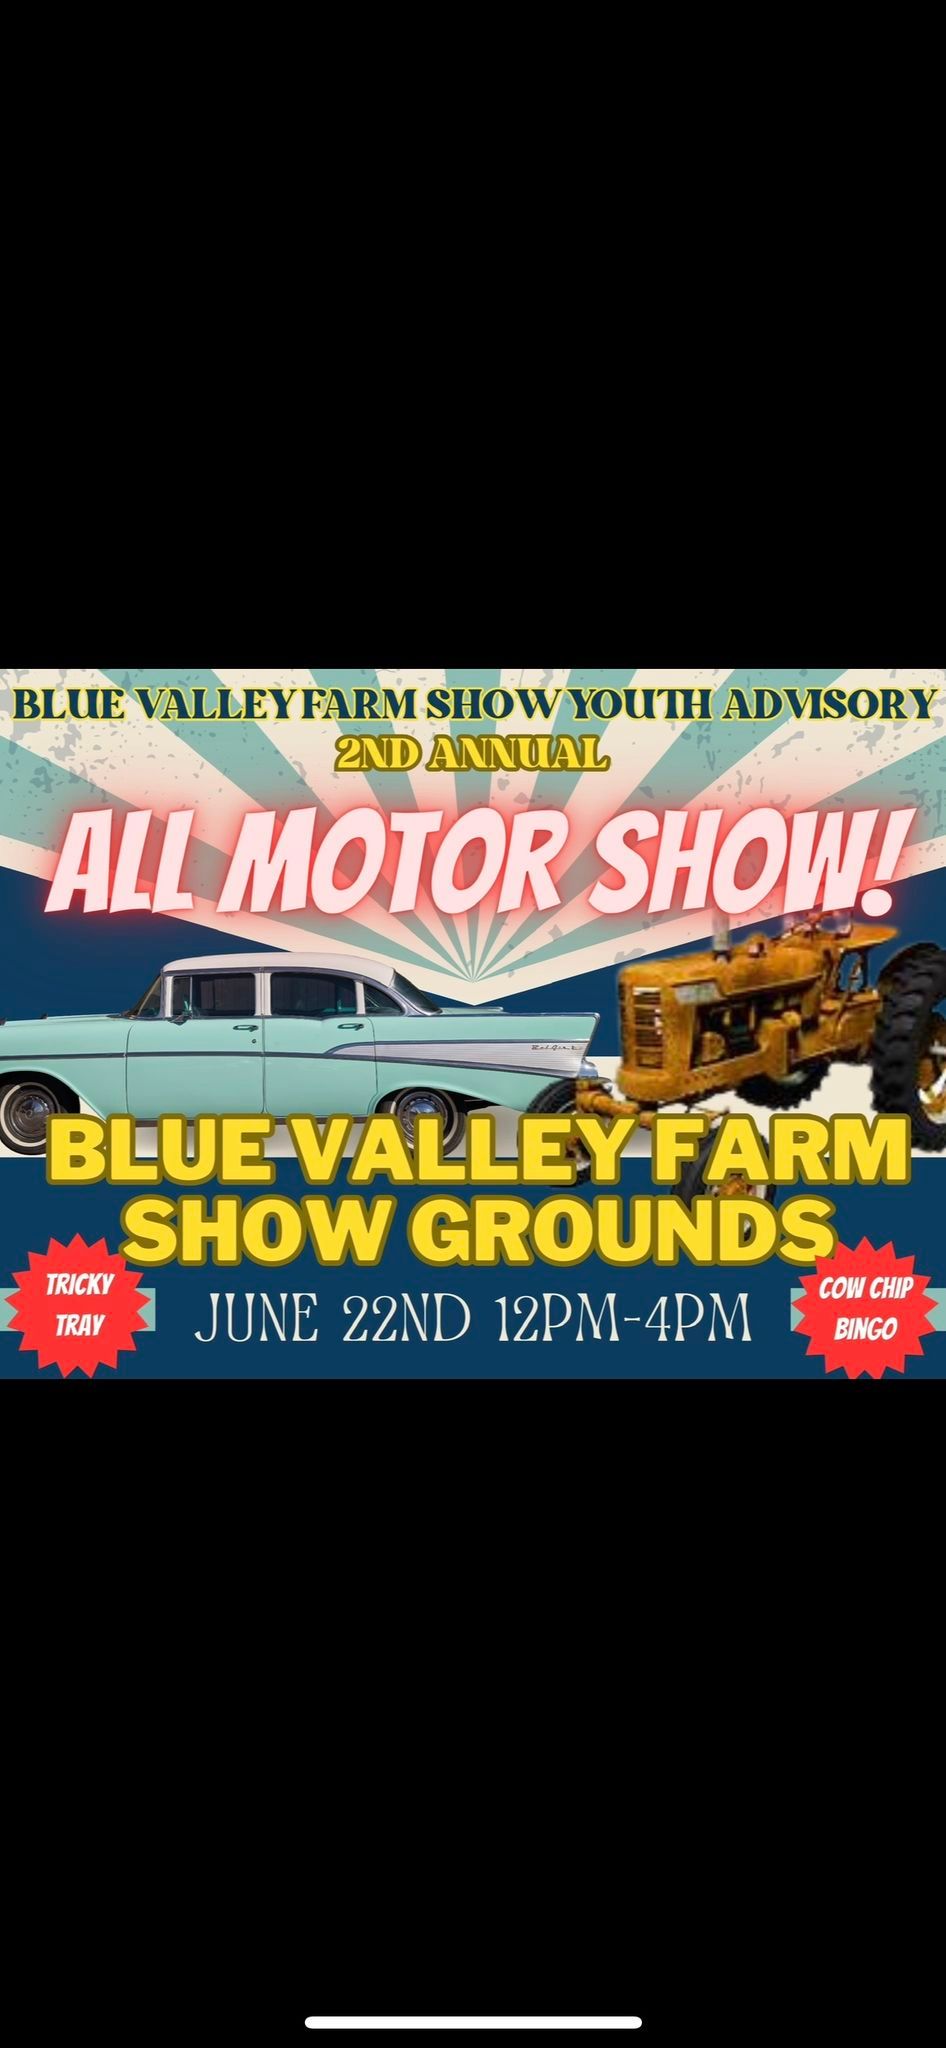 Blue Valley Farm Show Youth Advisory All Motor Show!